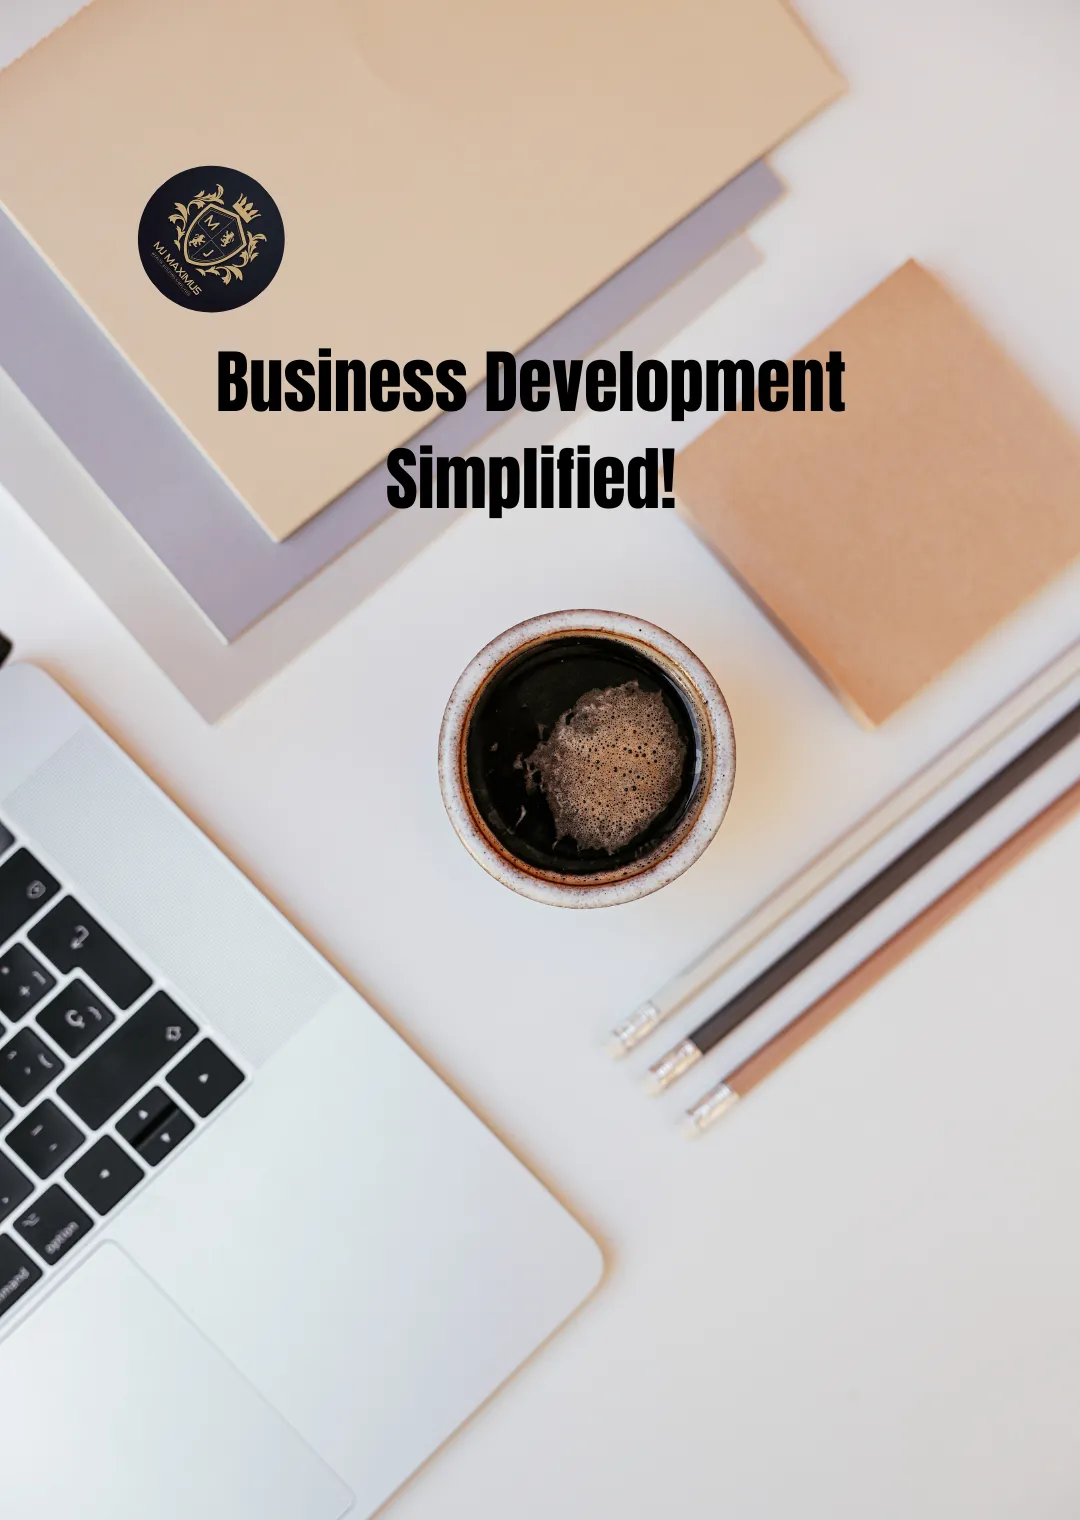 mjmaximus business development simplified